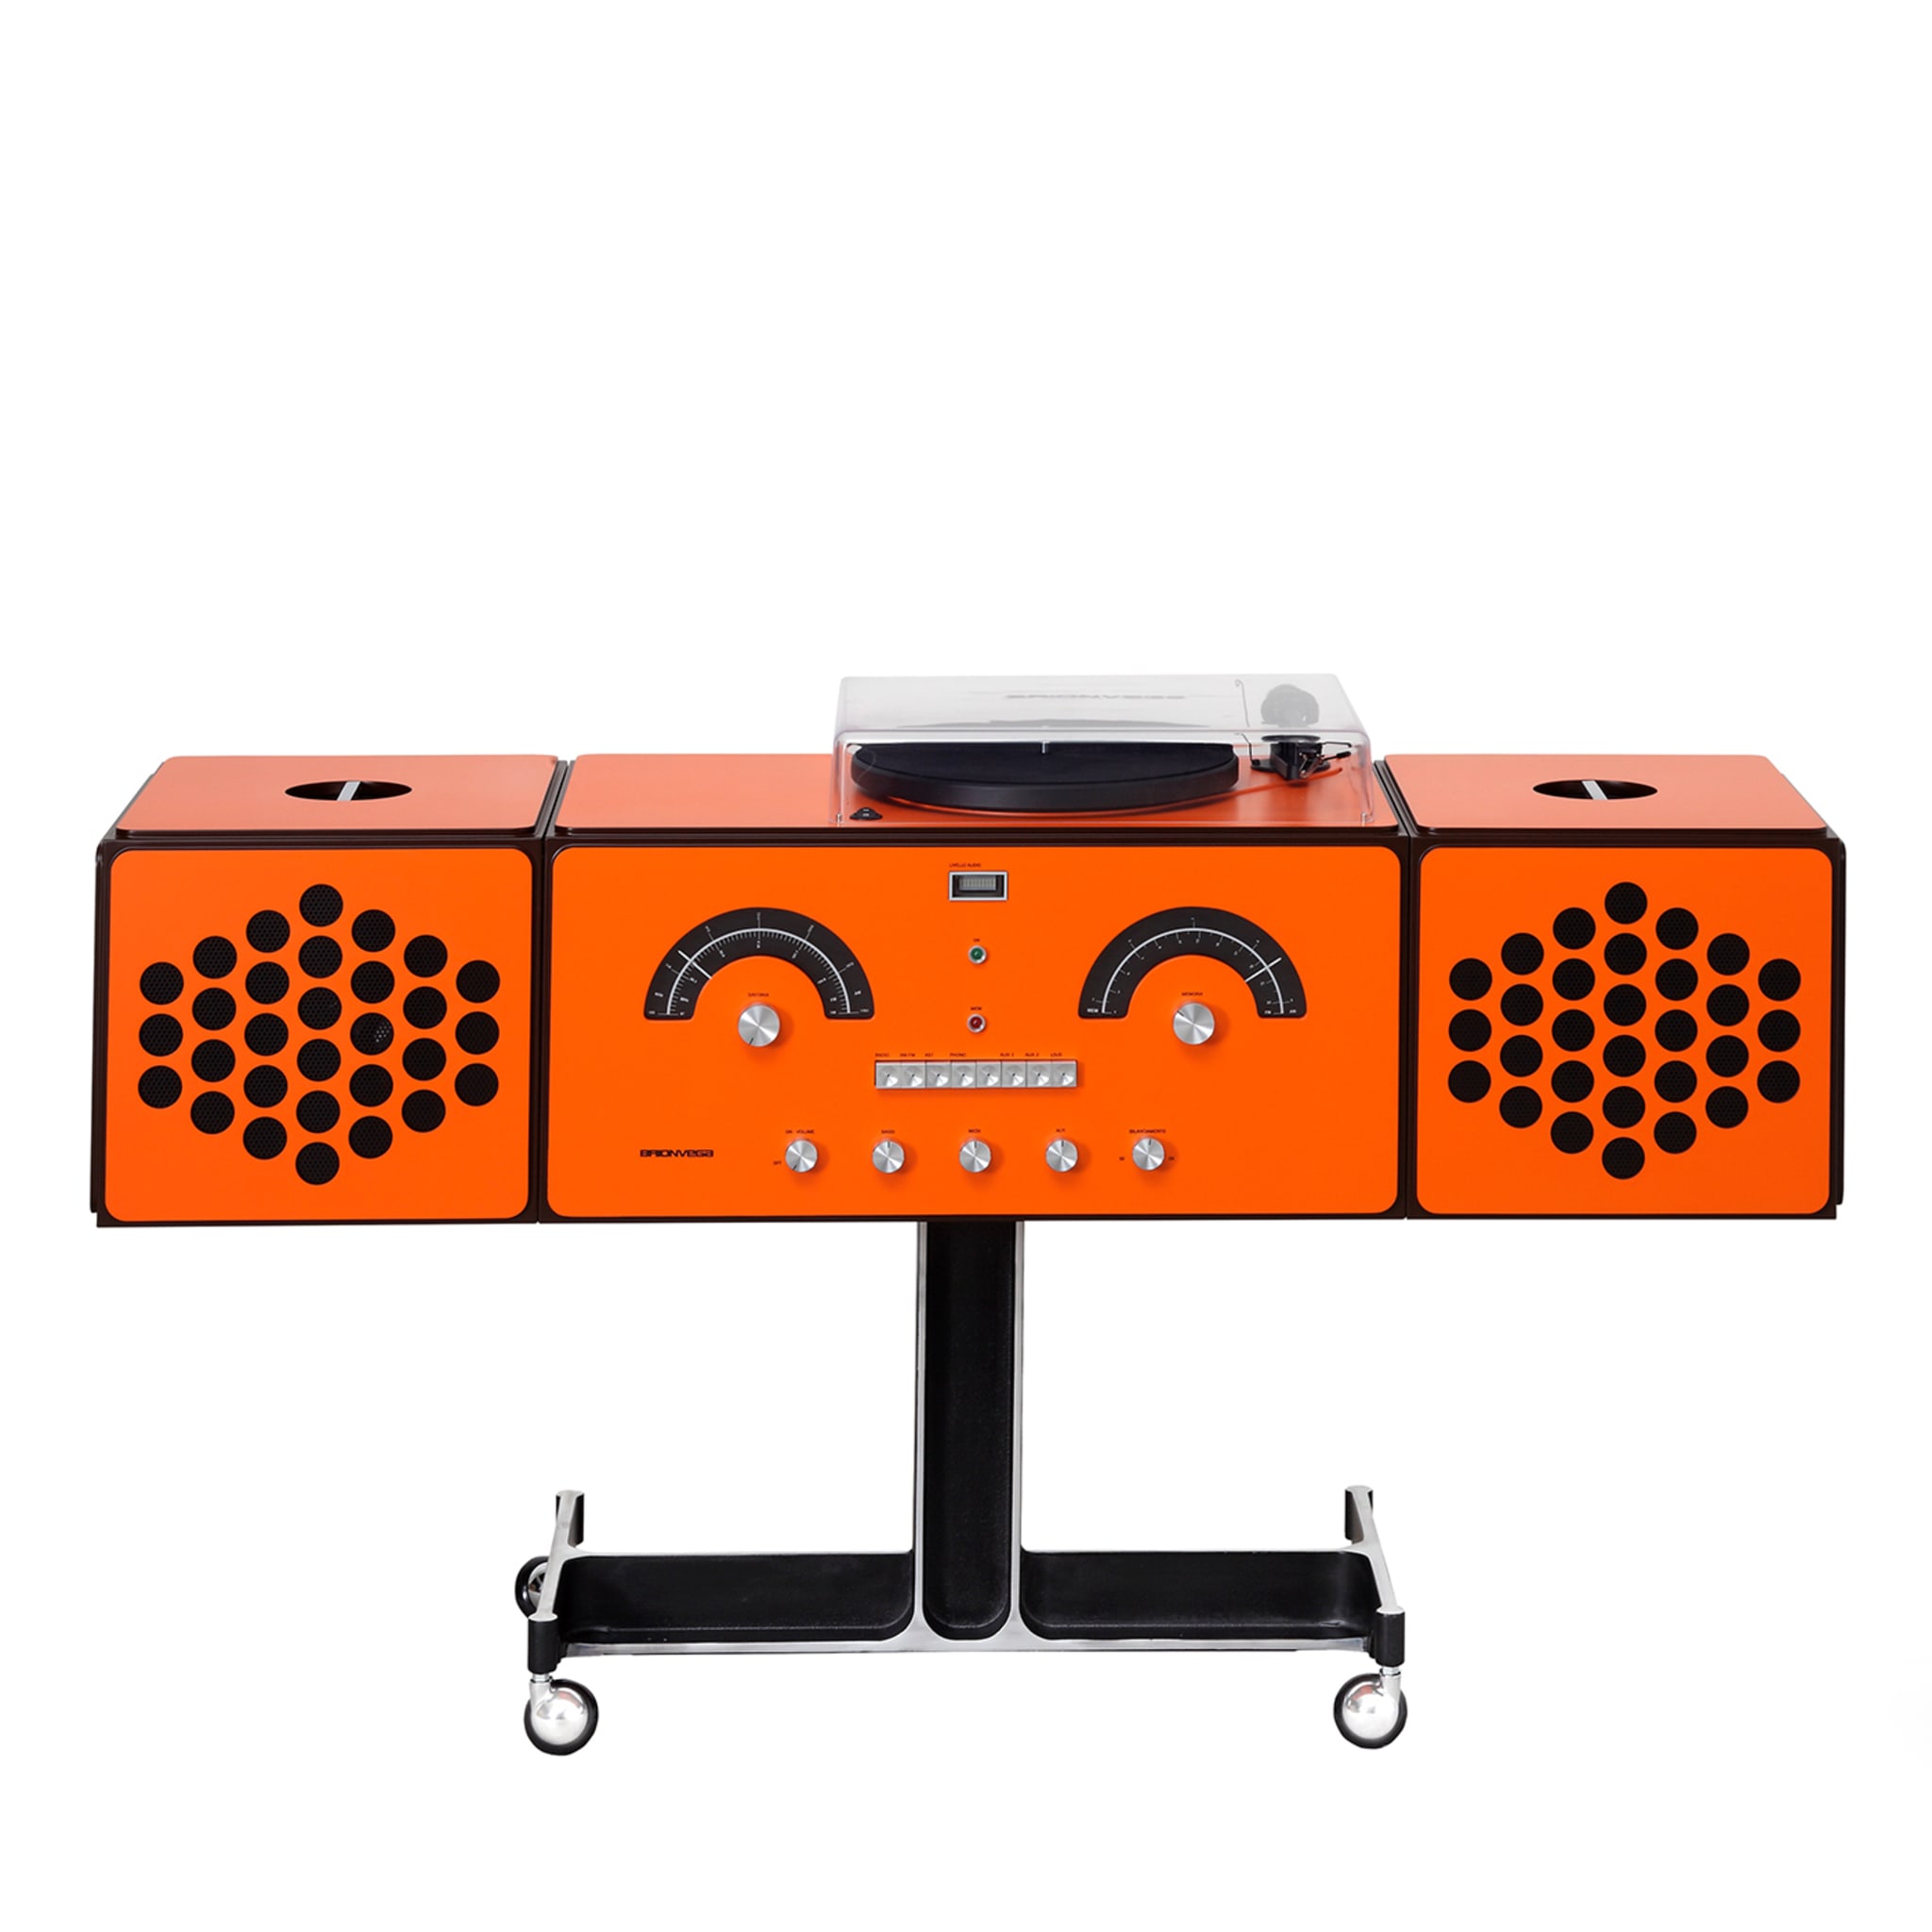 Orange Radiofonografo RR226 von Achille und Pier Giacomo Castiglioni - Hauptansicht